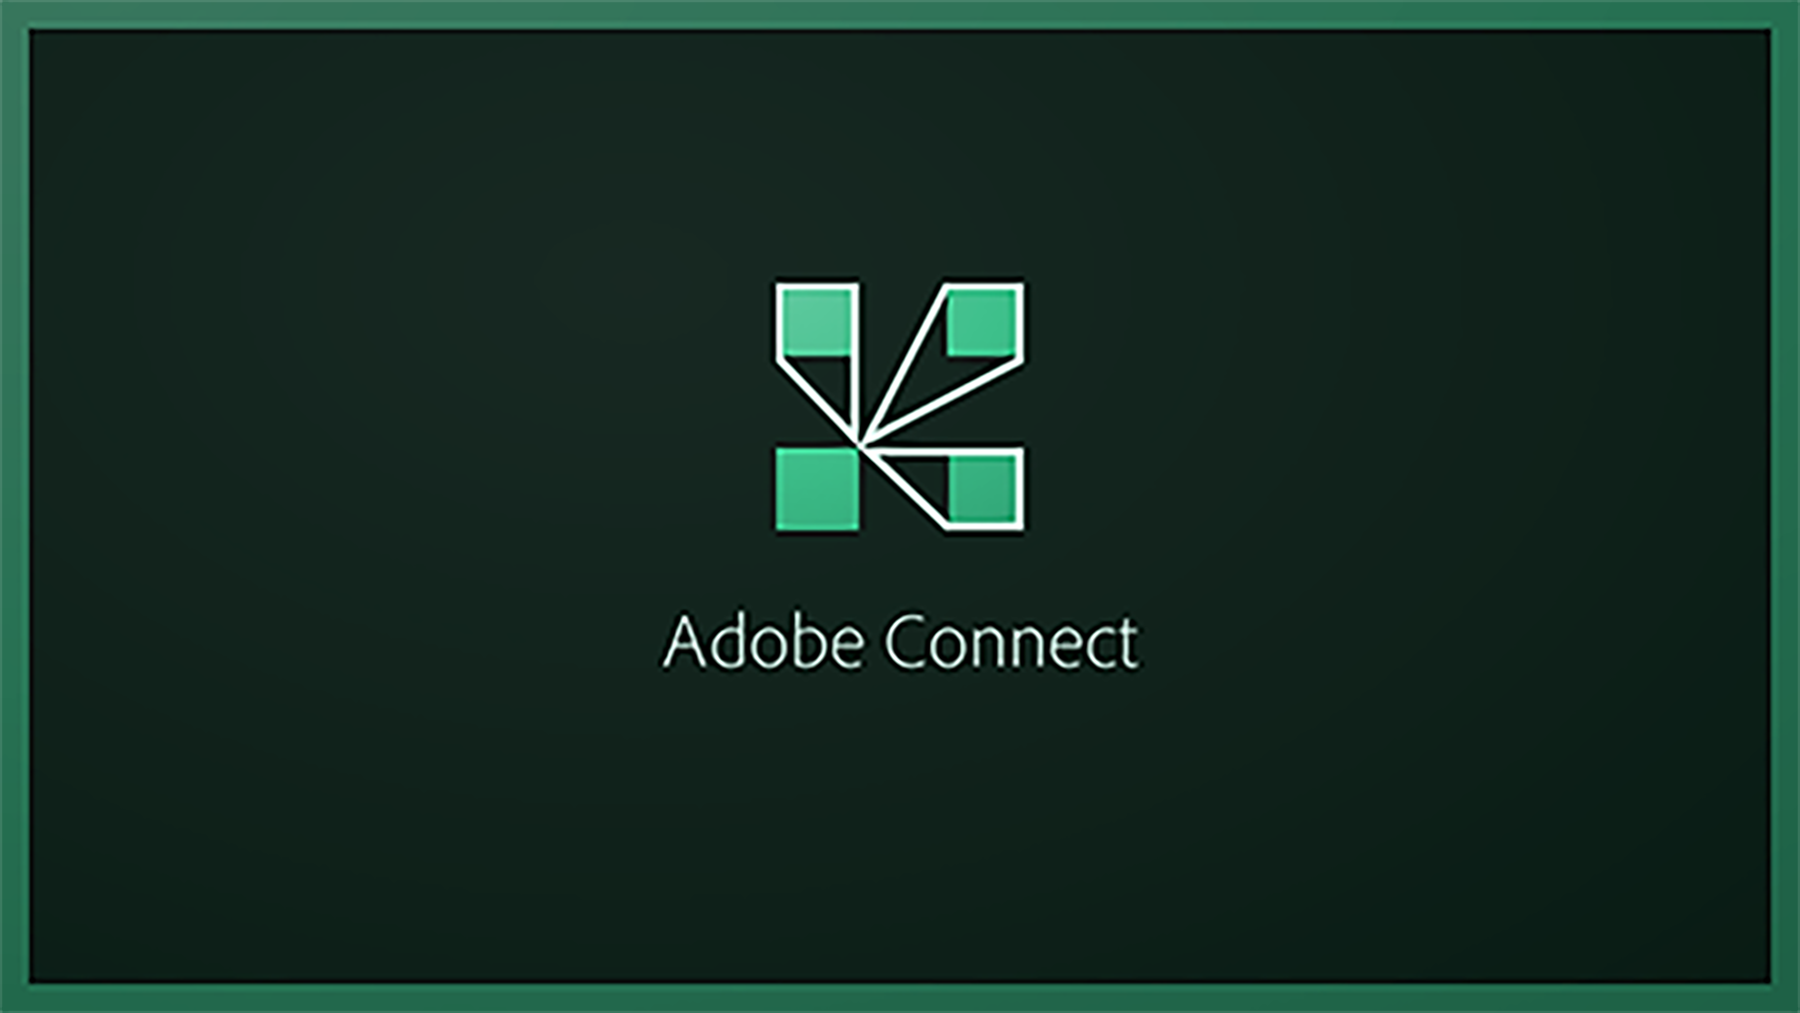 Ne connect. Adobe connect. Adobe. Adobe Acrobat connect. Adobe connect logo.